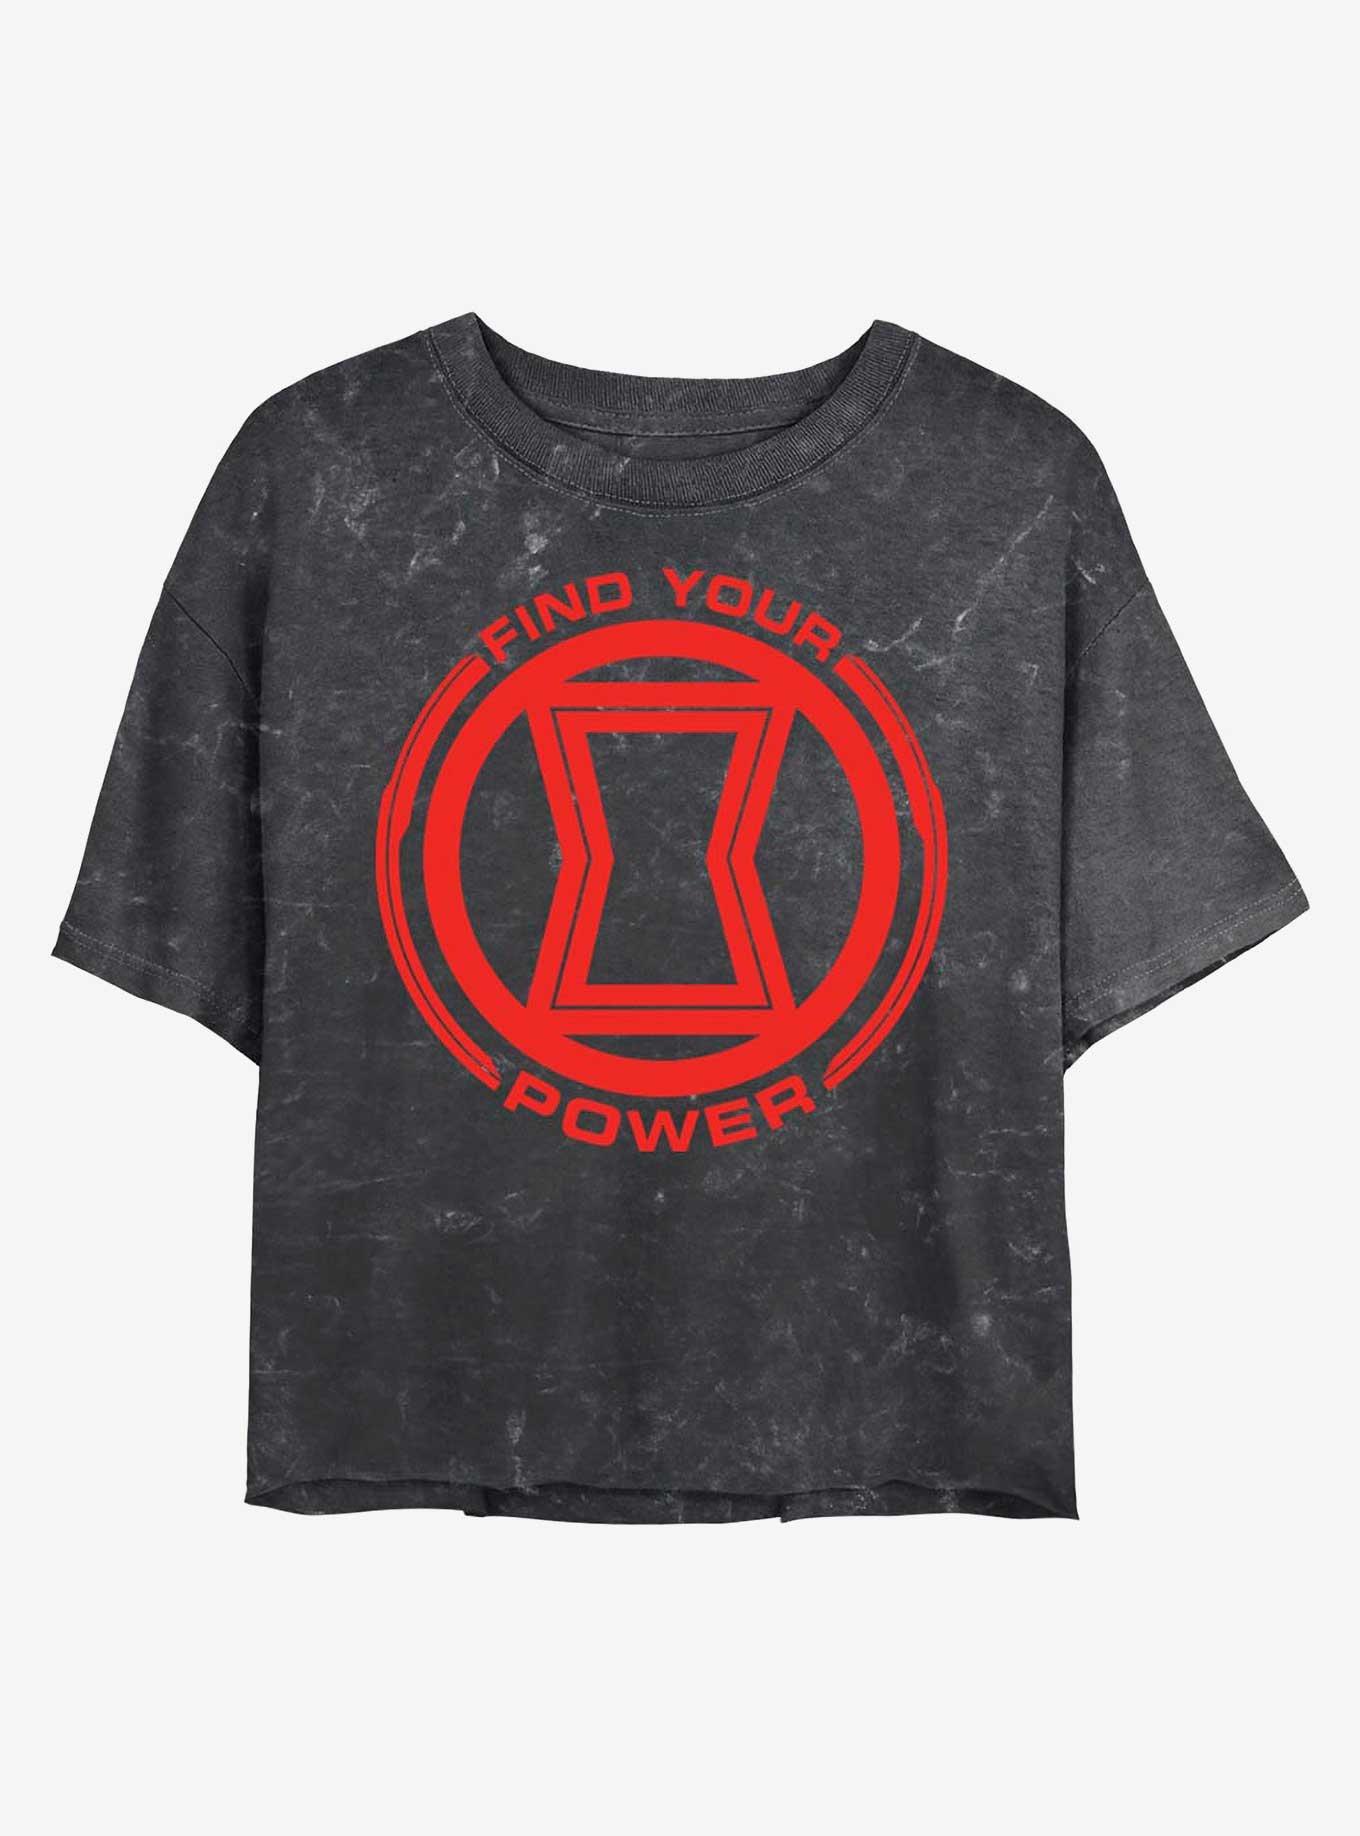 Marvel Black Widow Power of Black Widow Mineral Wash Crop Girls T-Shirt, BLACK, hi-res